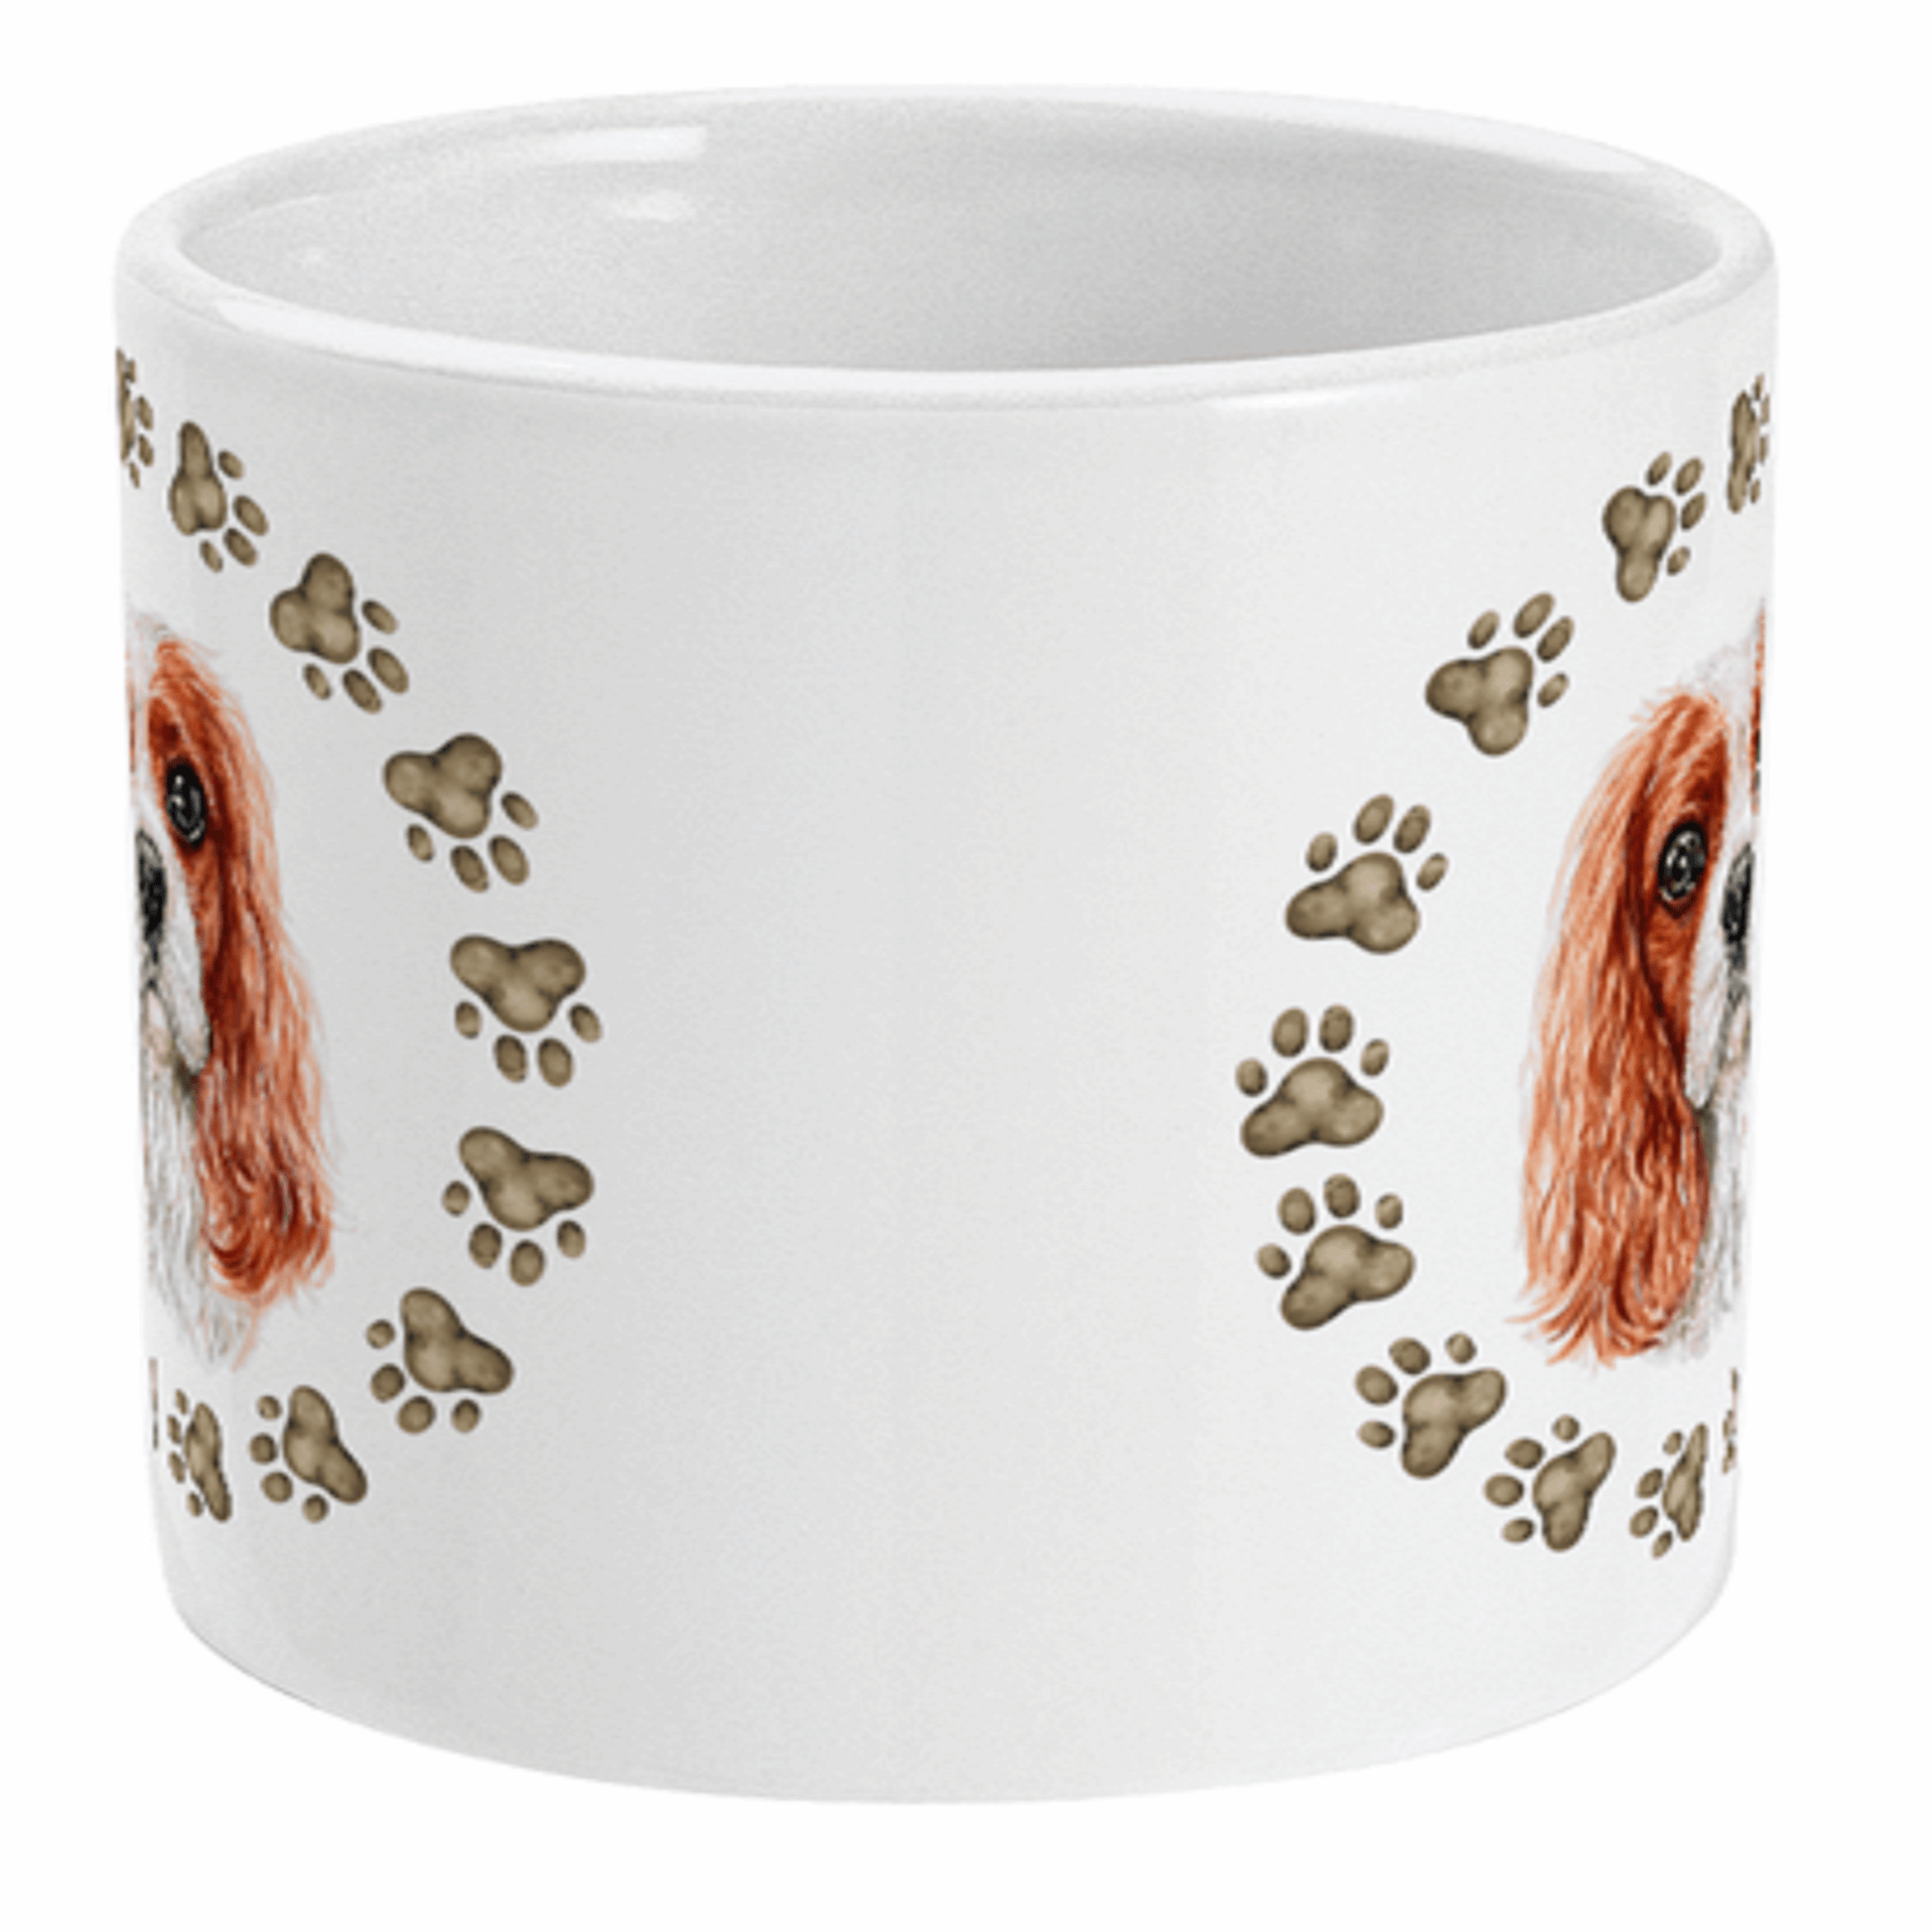  Cavalier King Charles Spaniel Coffee Mug by Free Spirit Accessories sold by Free Spirit Accessories